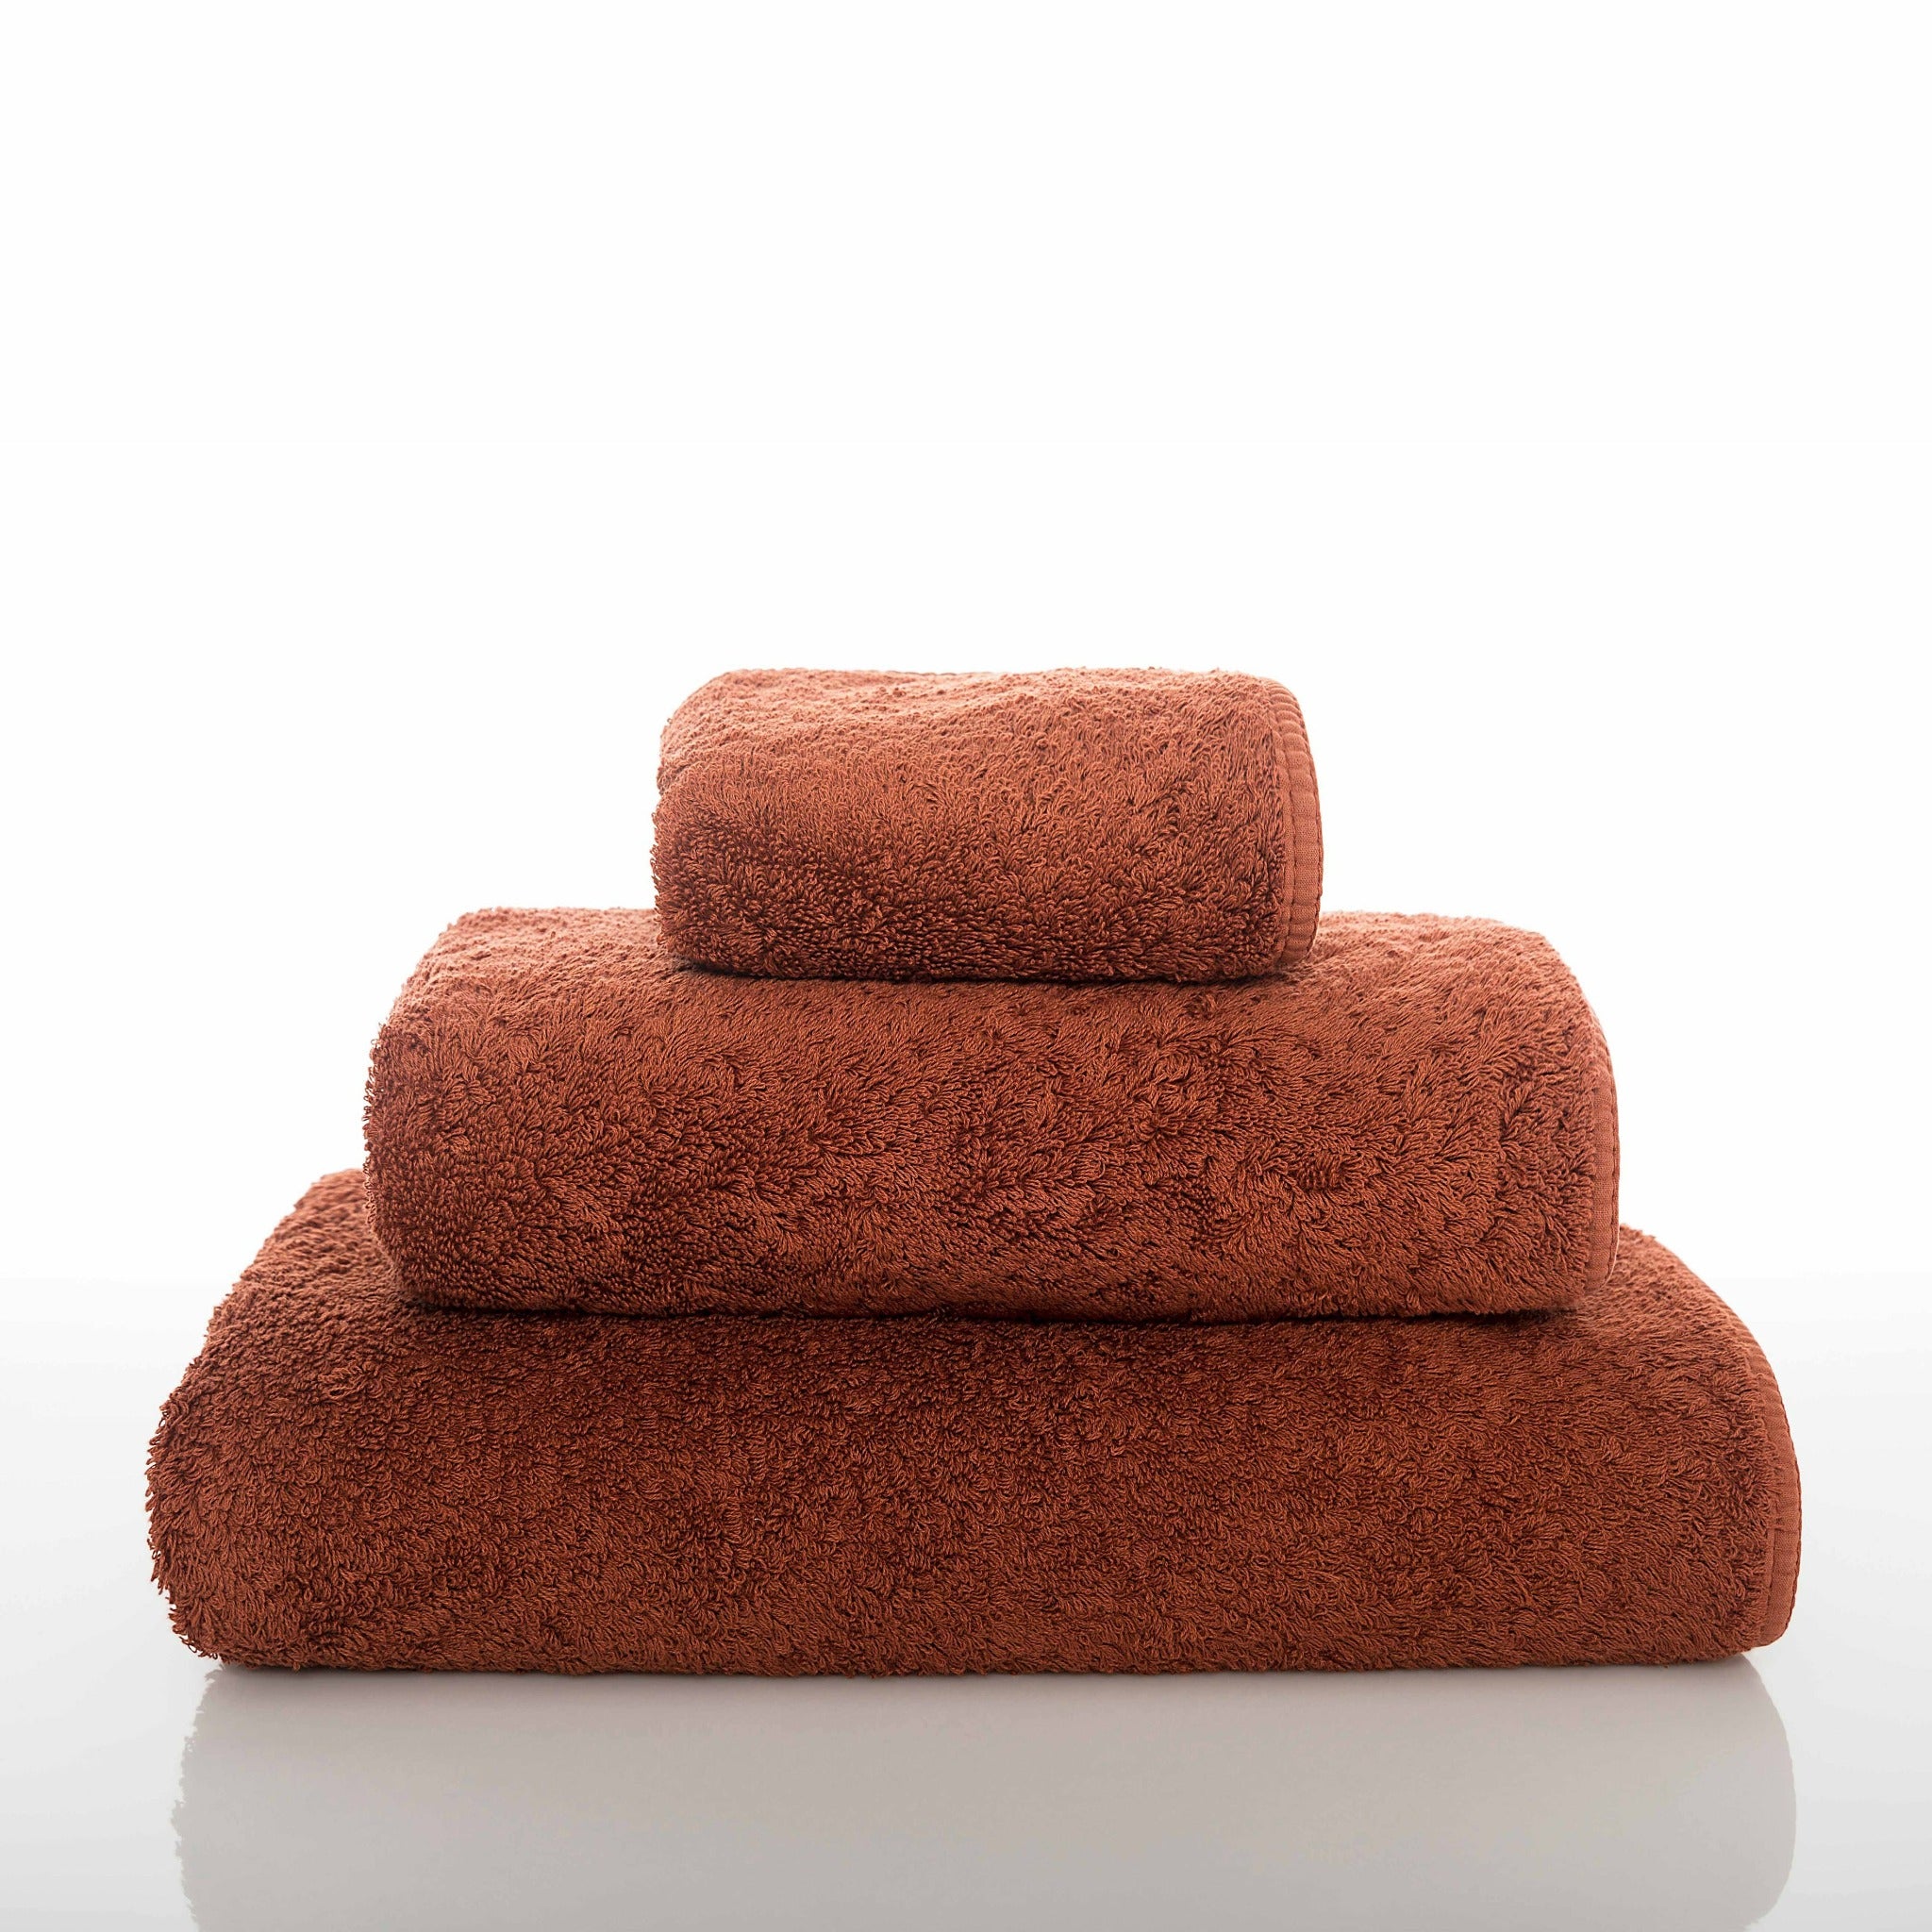 Natural Linen Towel Large Throw Towel Plaid Bath Towels Bath Sheets Pre  Washed Throw Sauna Towel Beach Sheet Gift Linen Towel Flat Sheet 